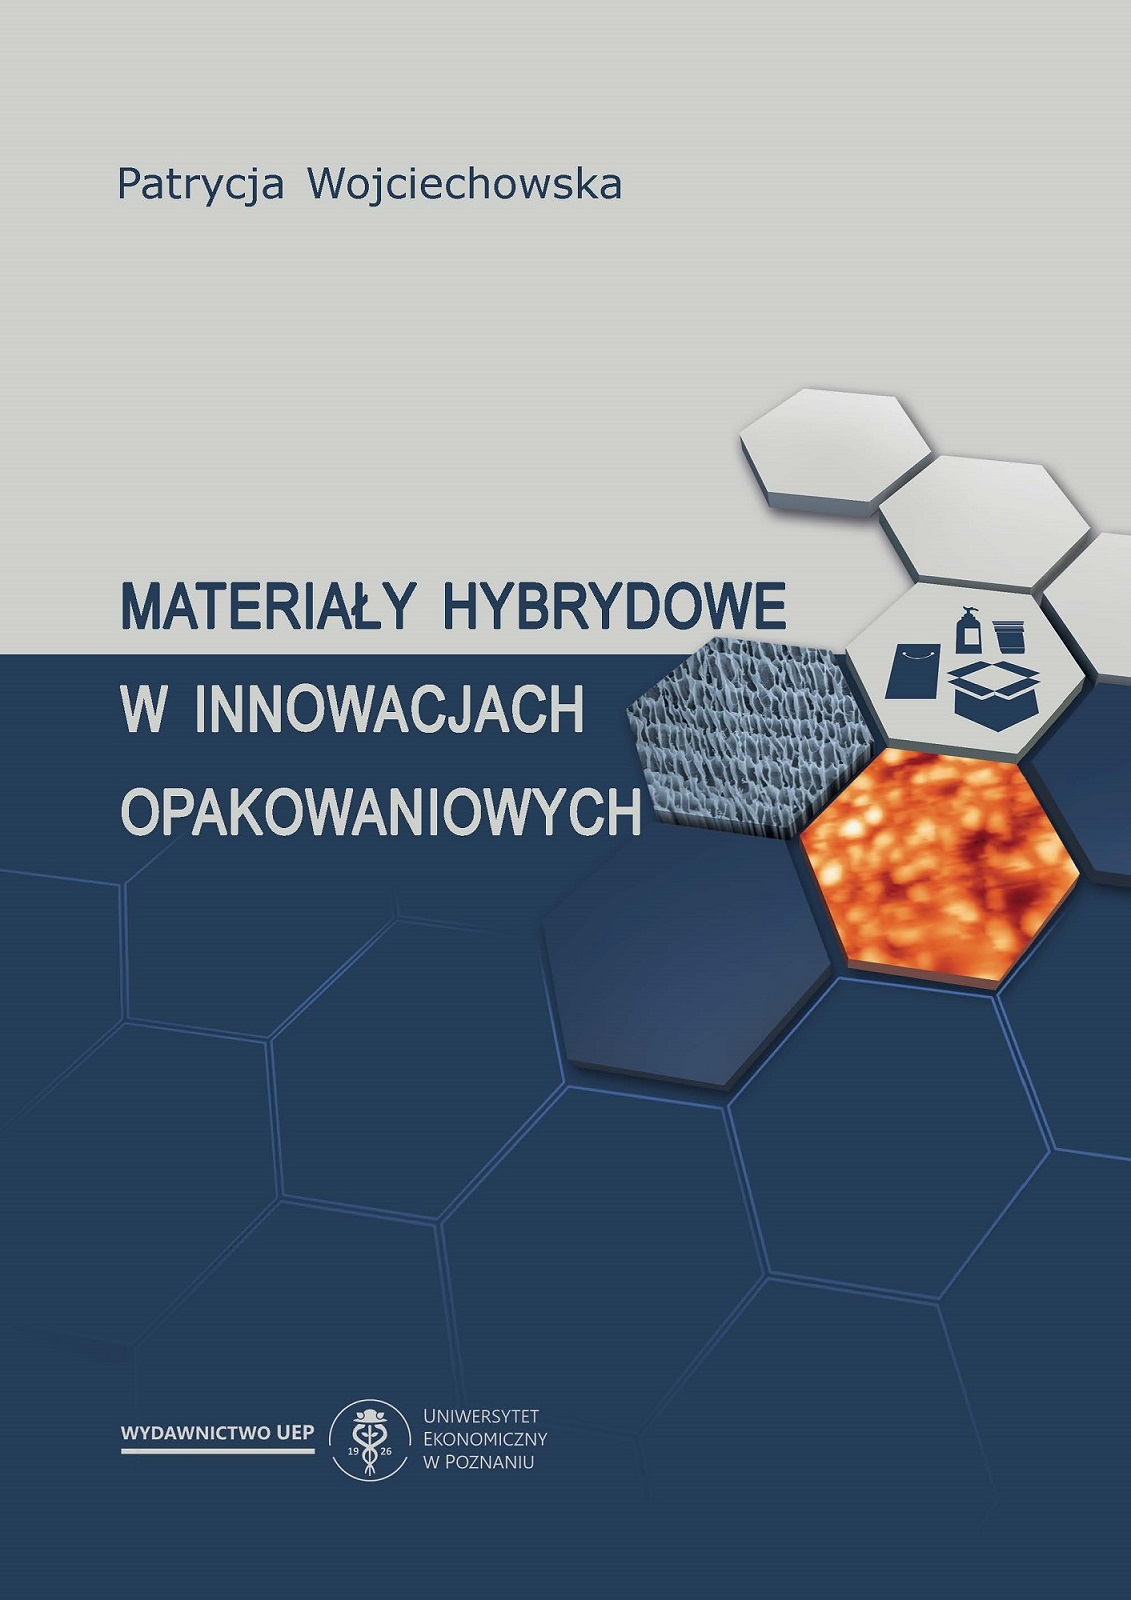 Hybrid materials in packaging innovations